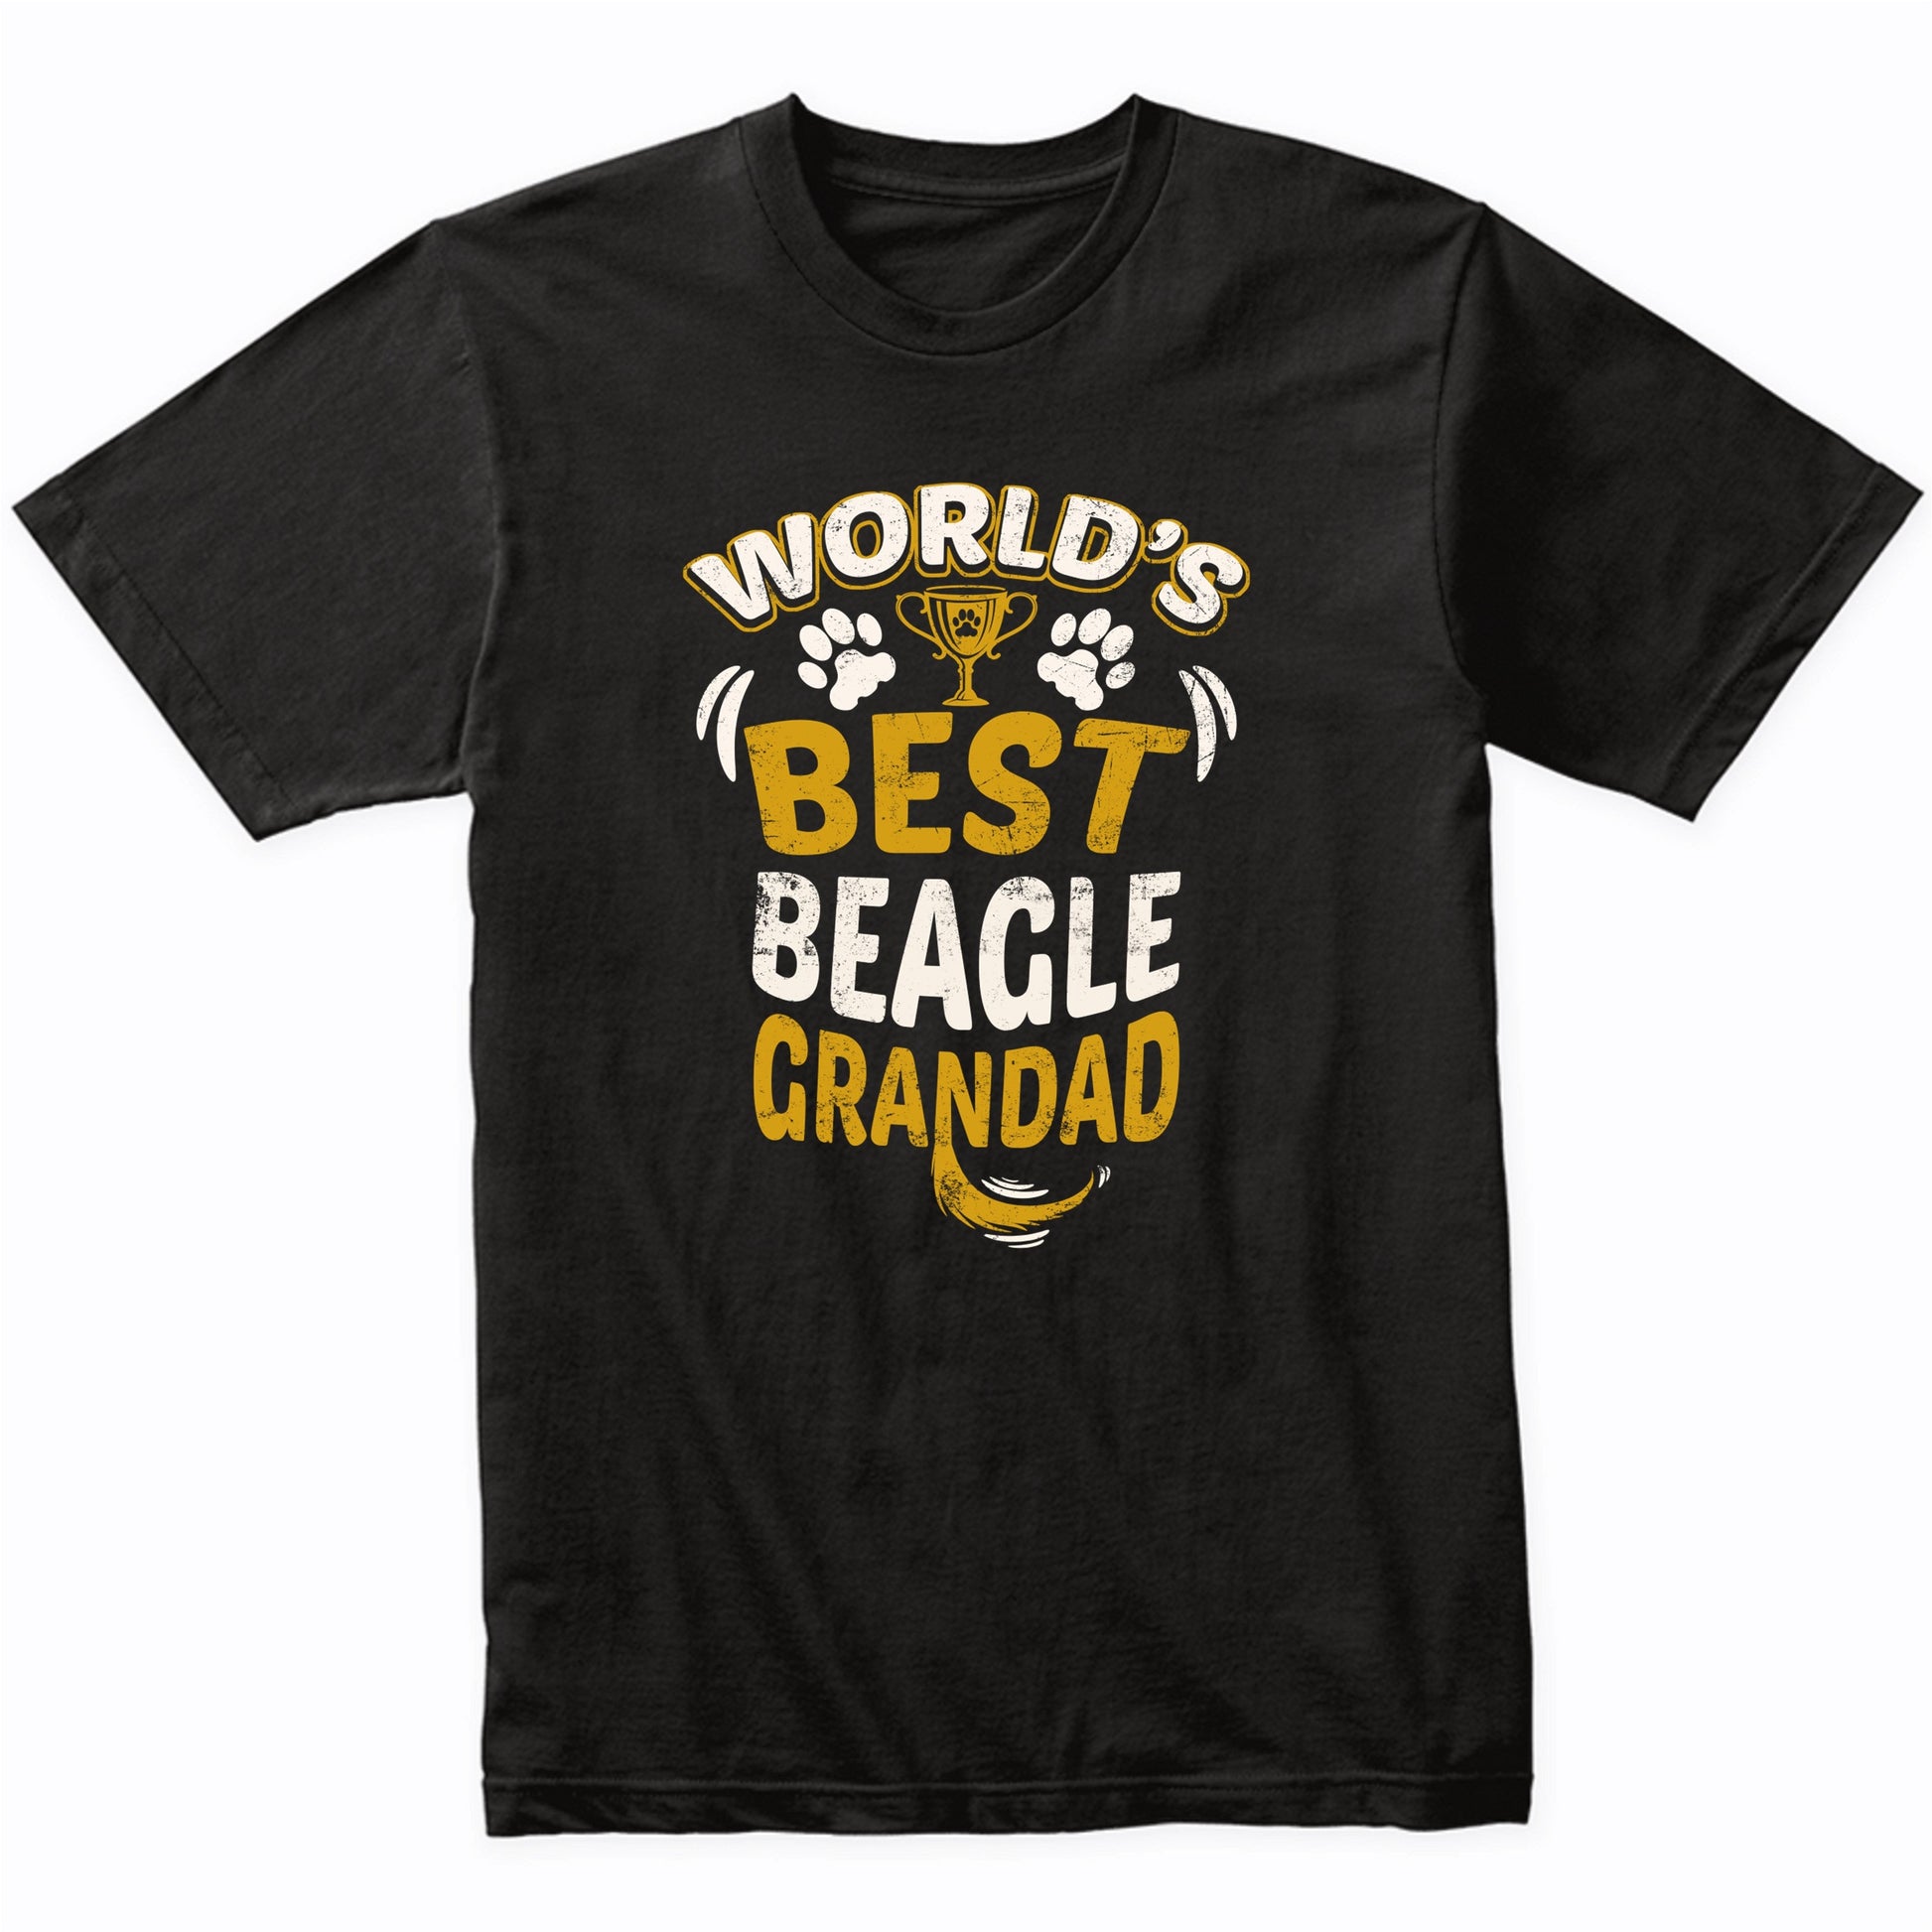 World's Best Beagle Grandad Graphic T-Shirt